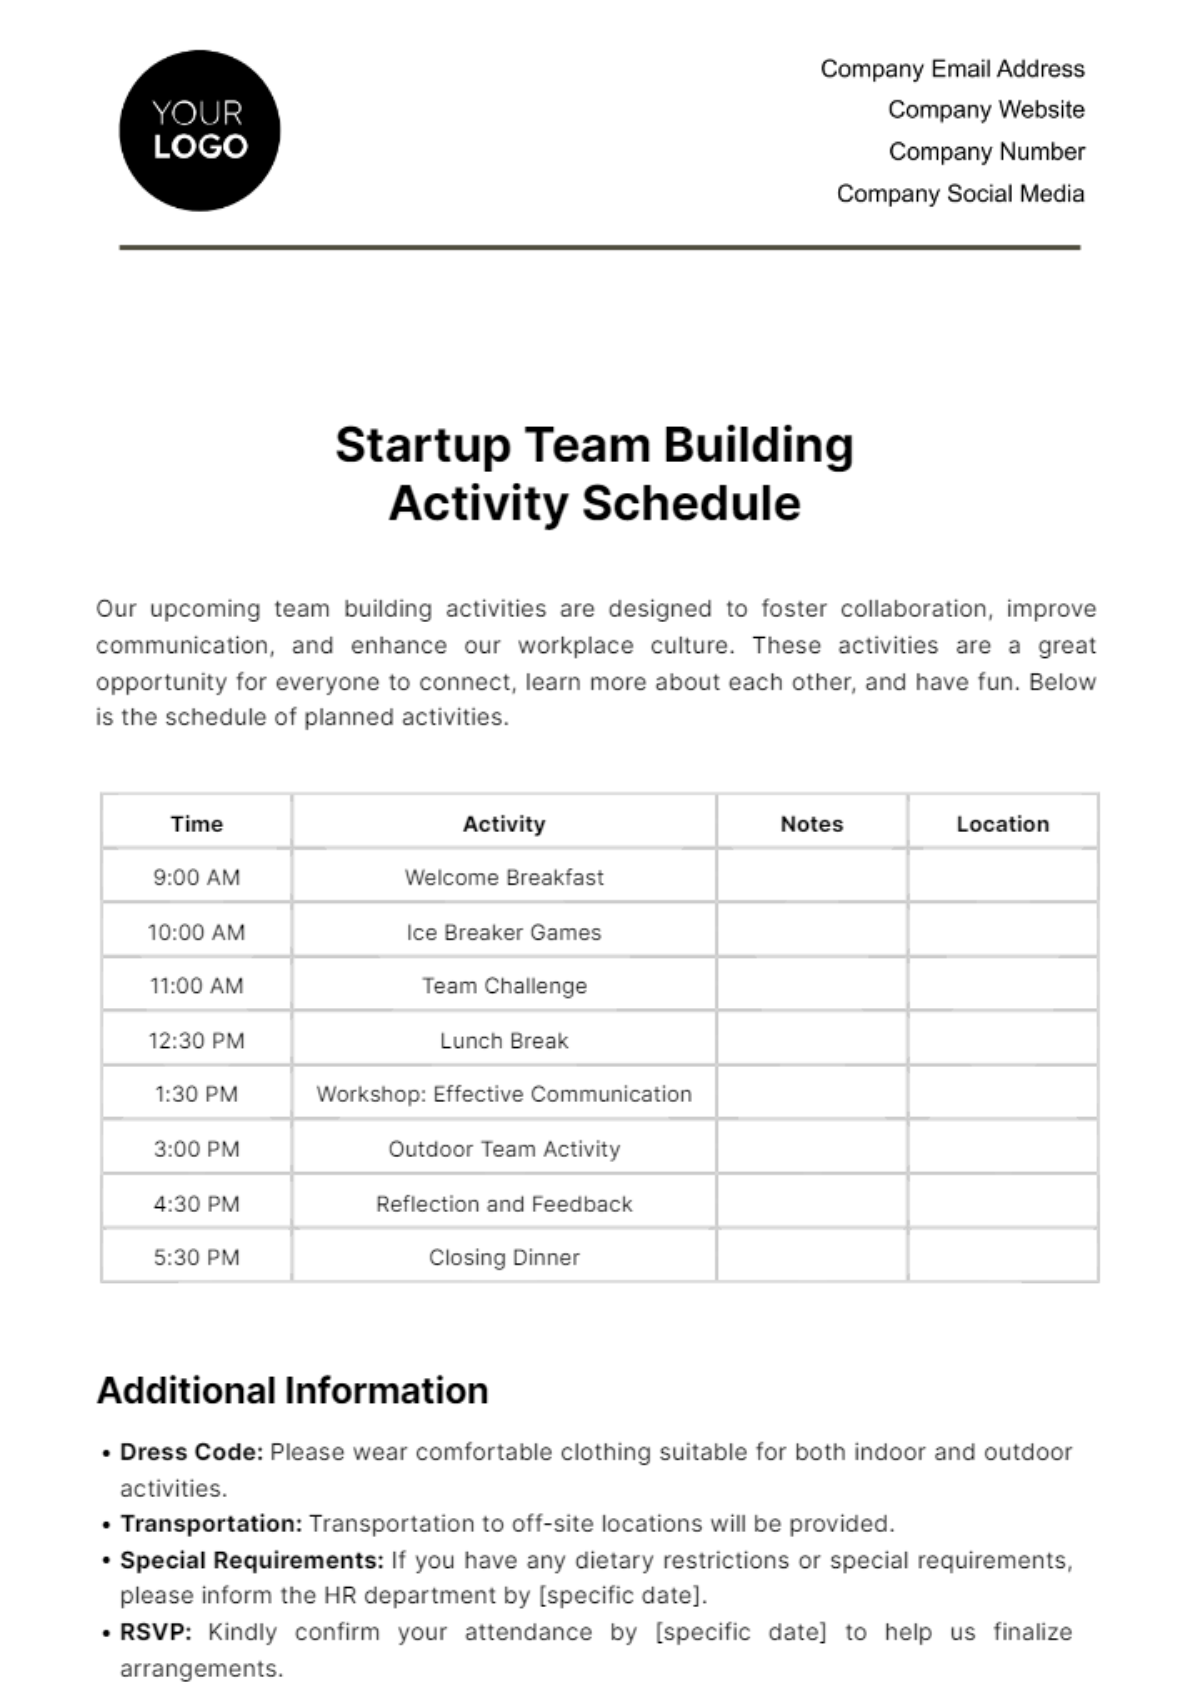 Startup Team Building Activity Schedule Template